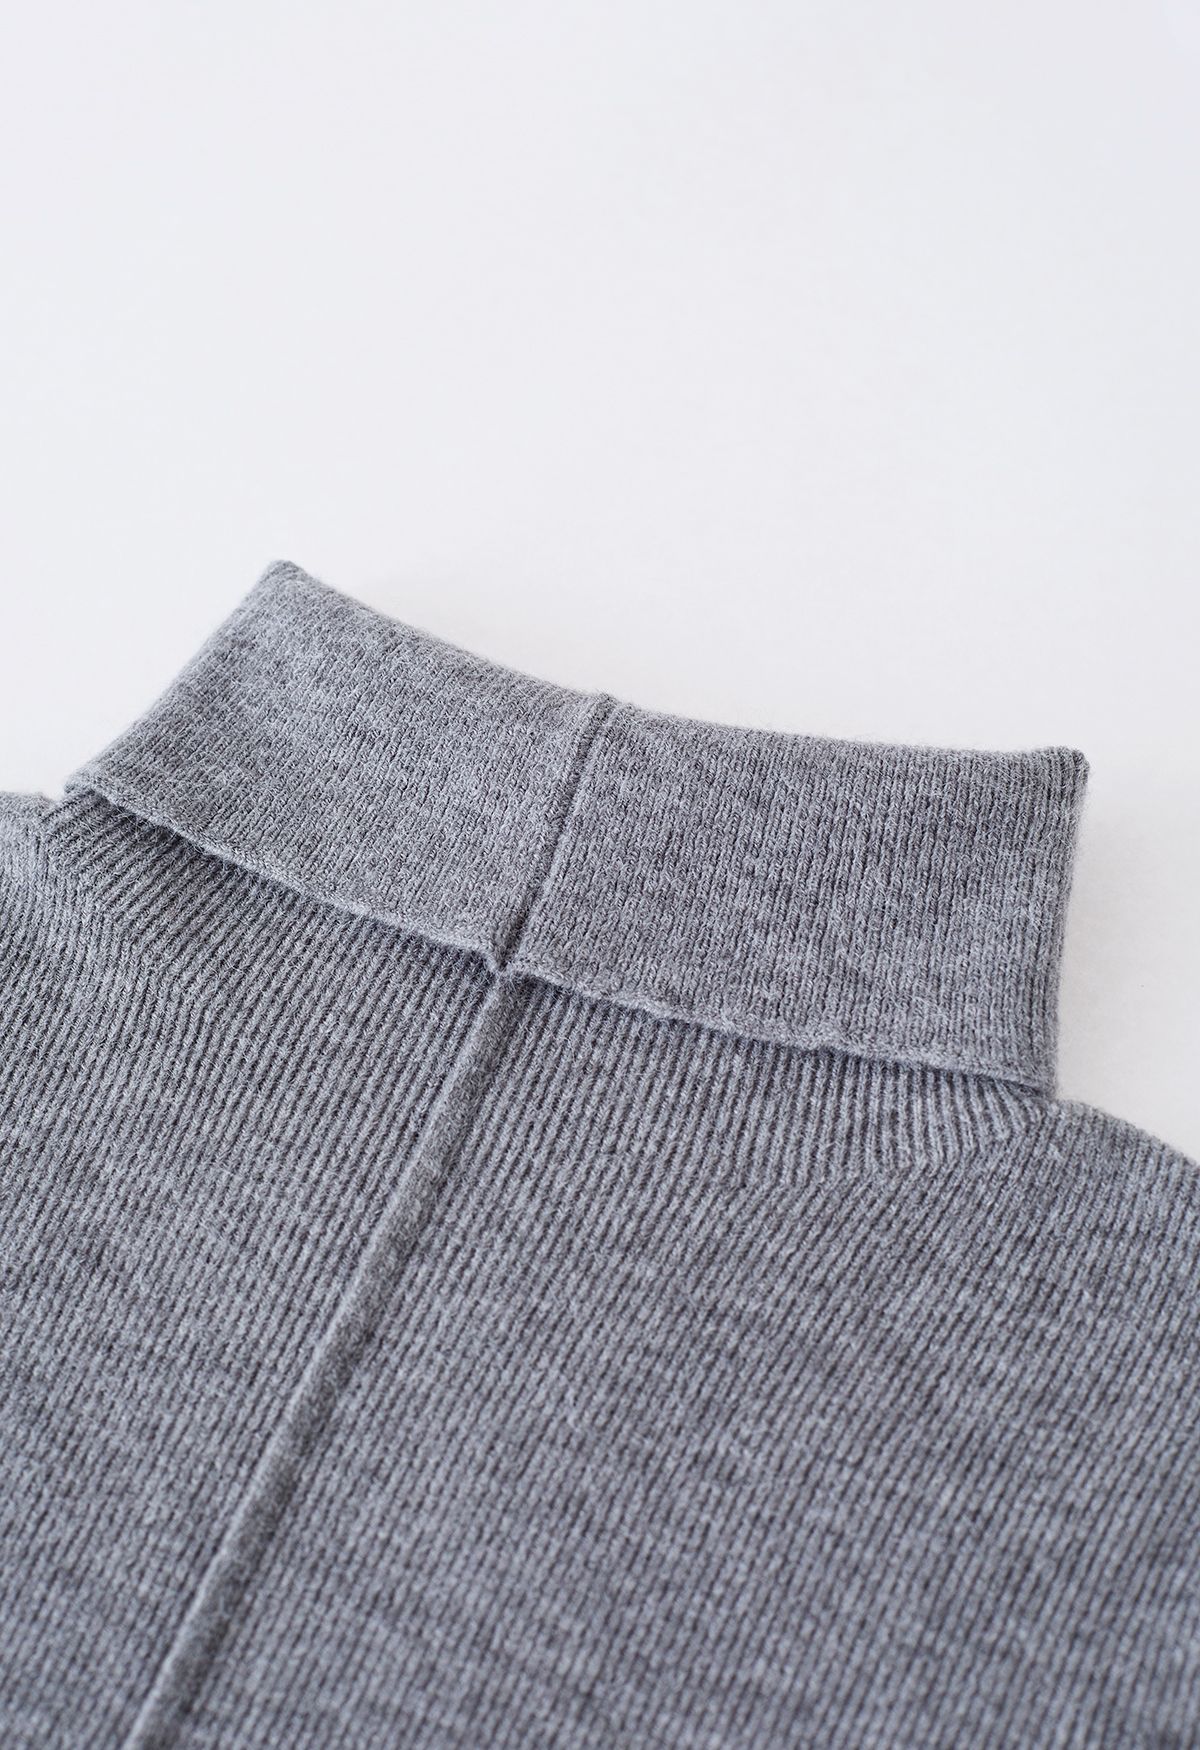 Seam Detail High Neck Slit Knit Top in Grey